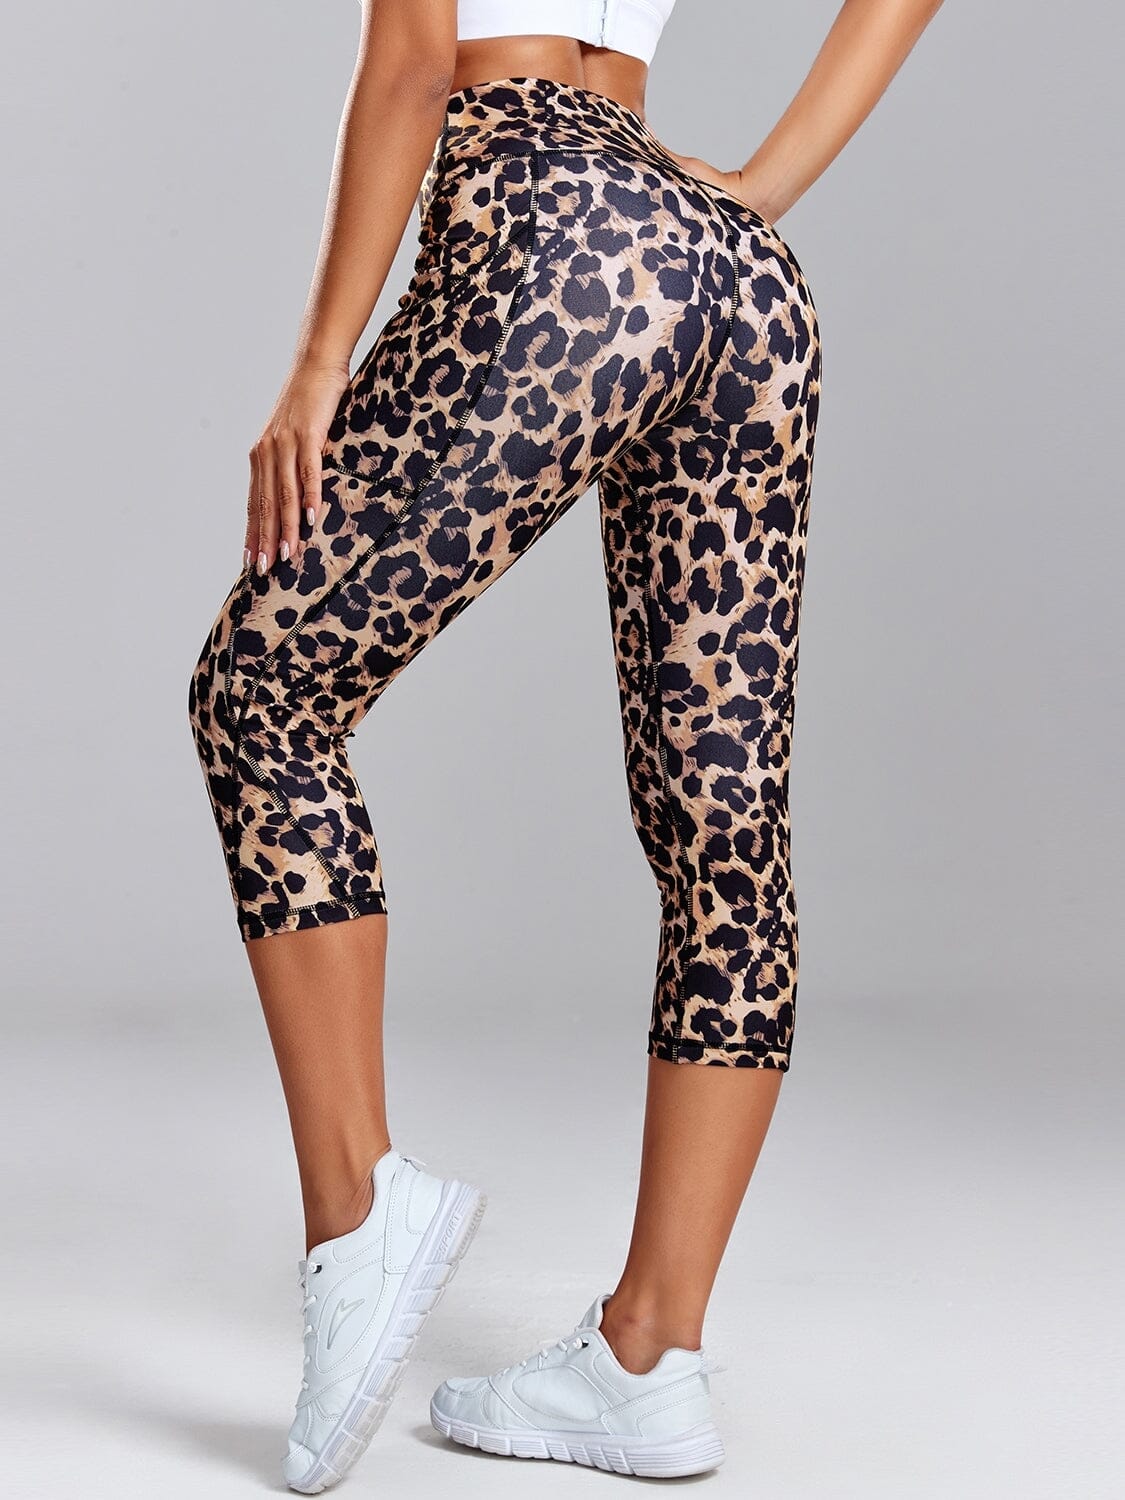 Lyhyet leoparditaskuiset leggingsit